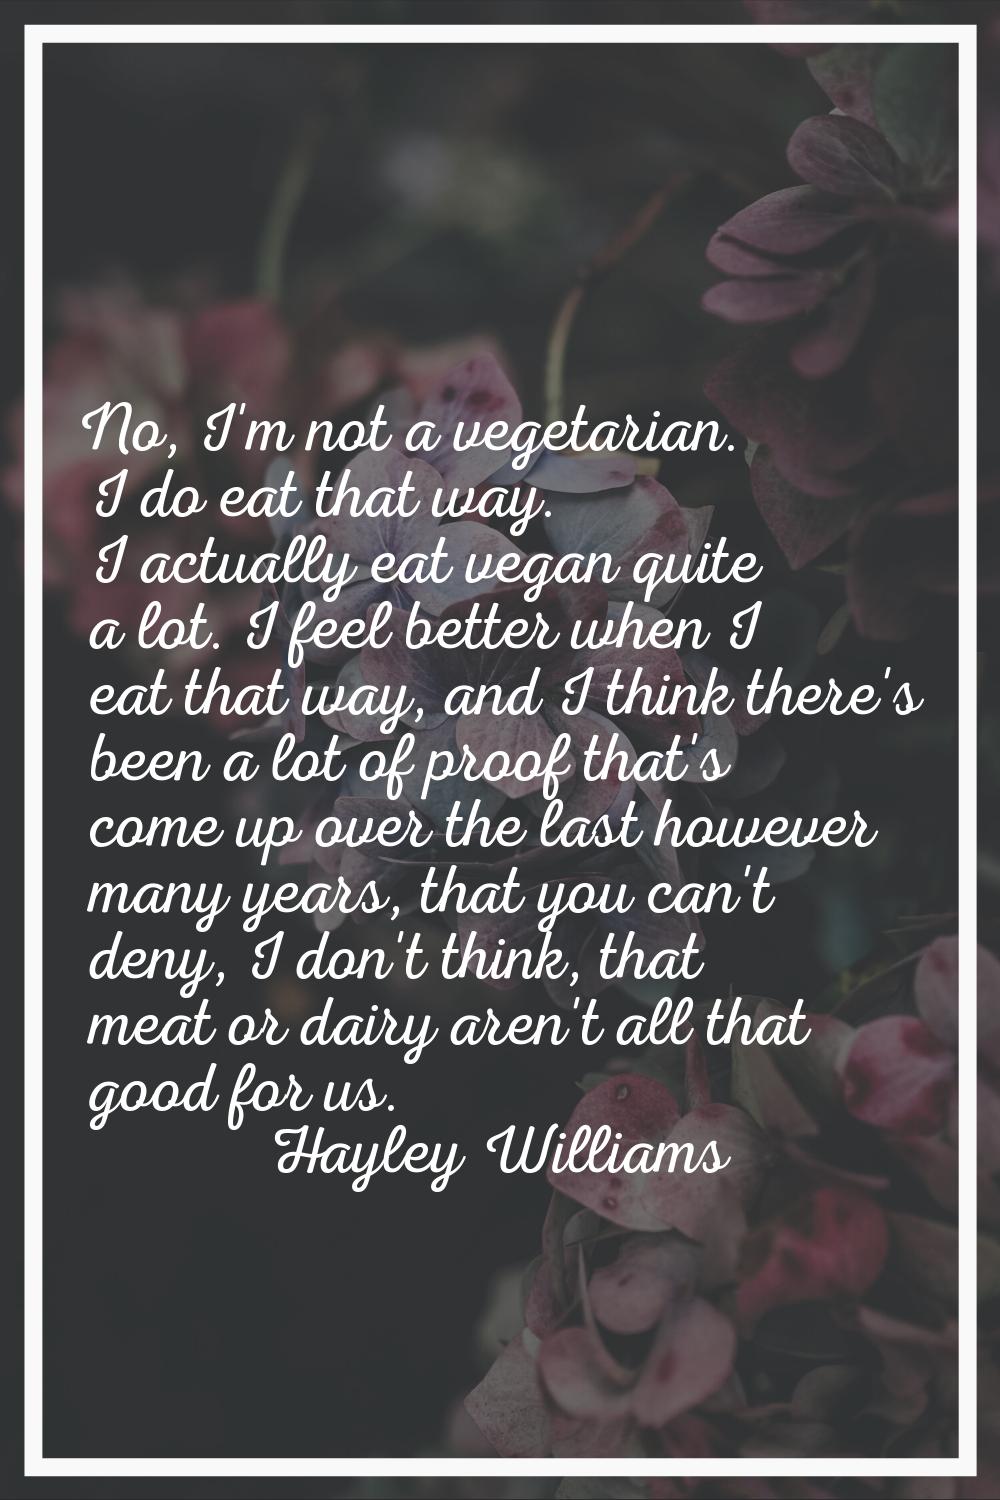 No, I'm not a vegetarian. I do eat that way. I actually eat vegan quite a lot. I feel better when I